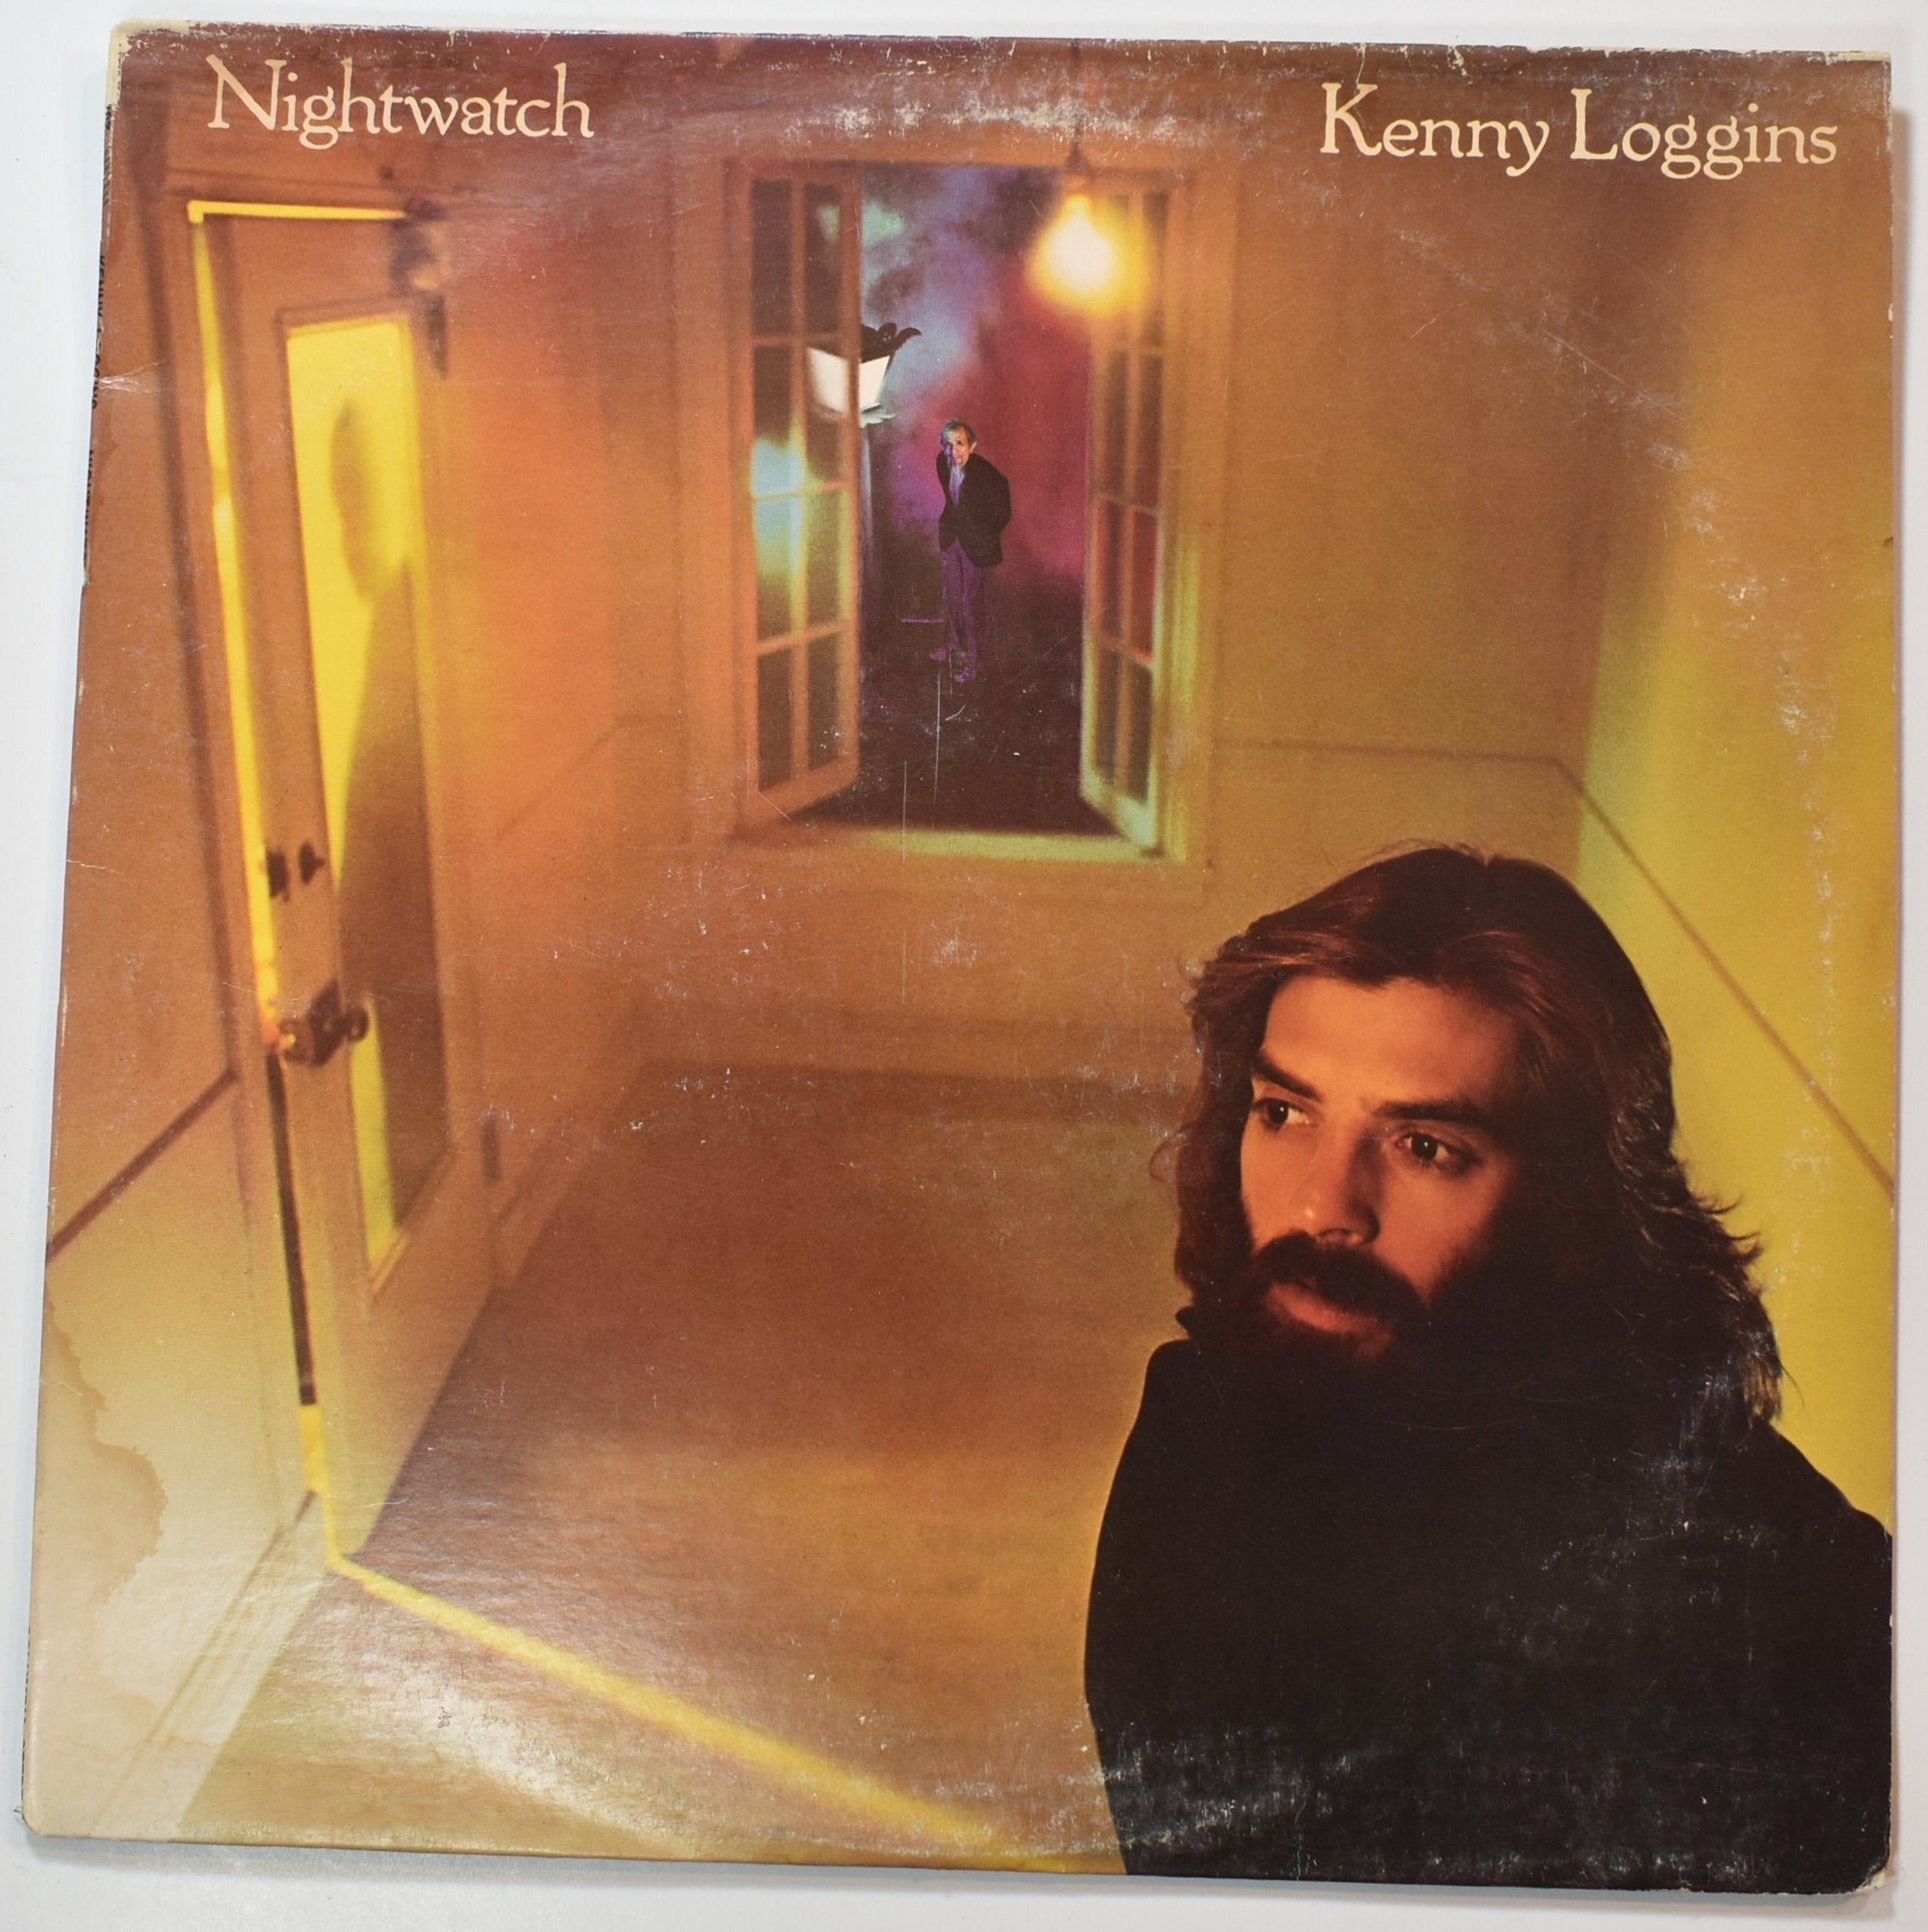 Vinyl Music Record Night watch Kenny Loggins used record